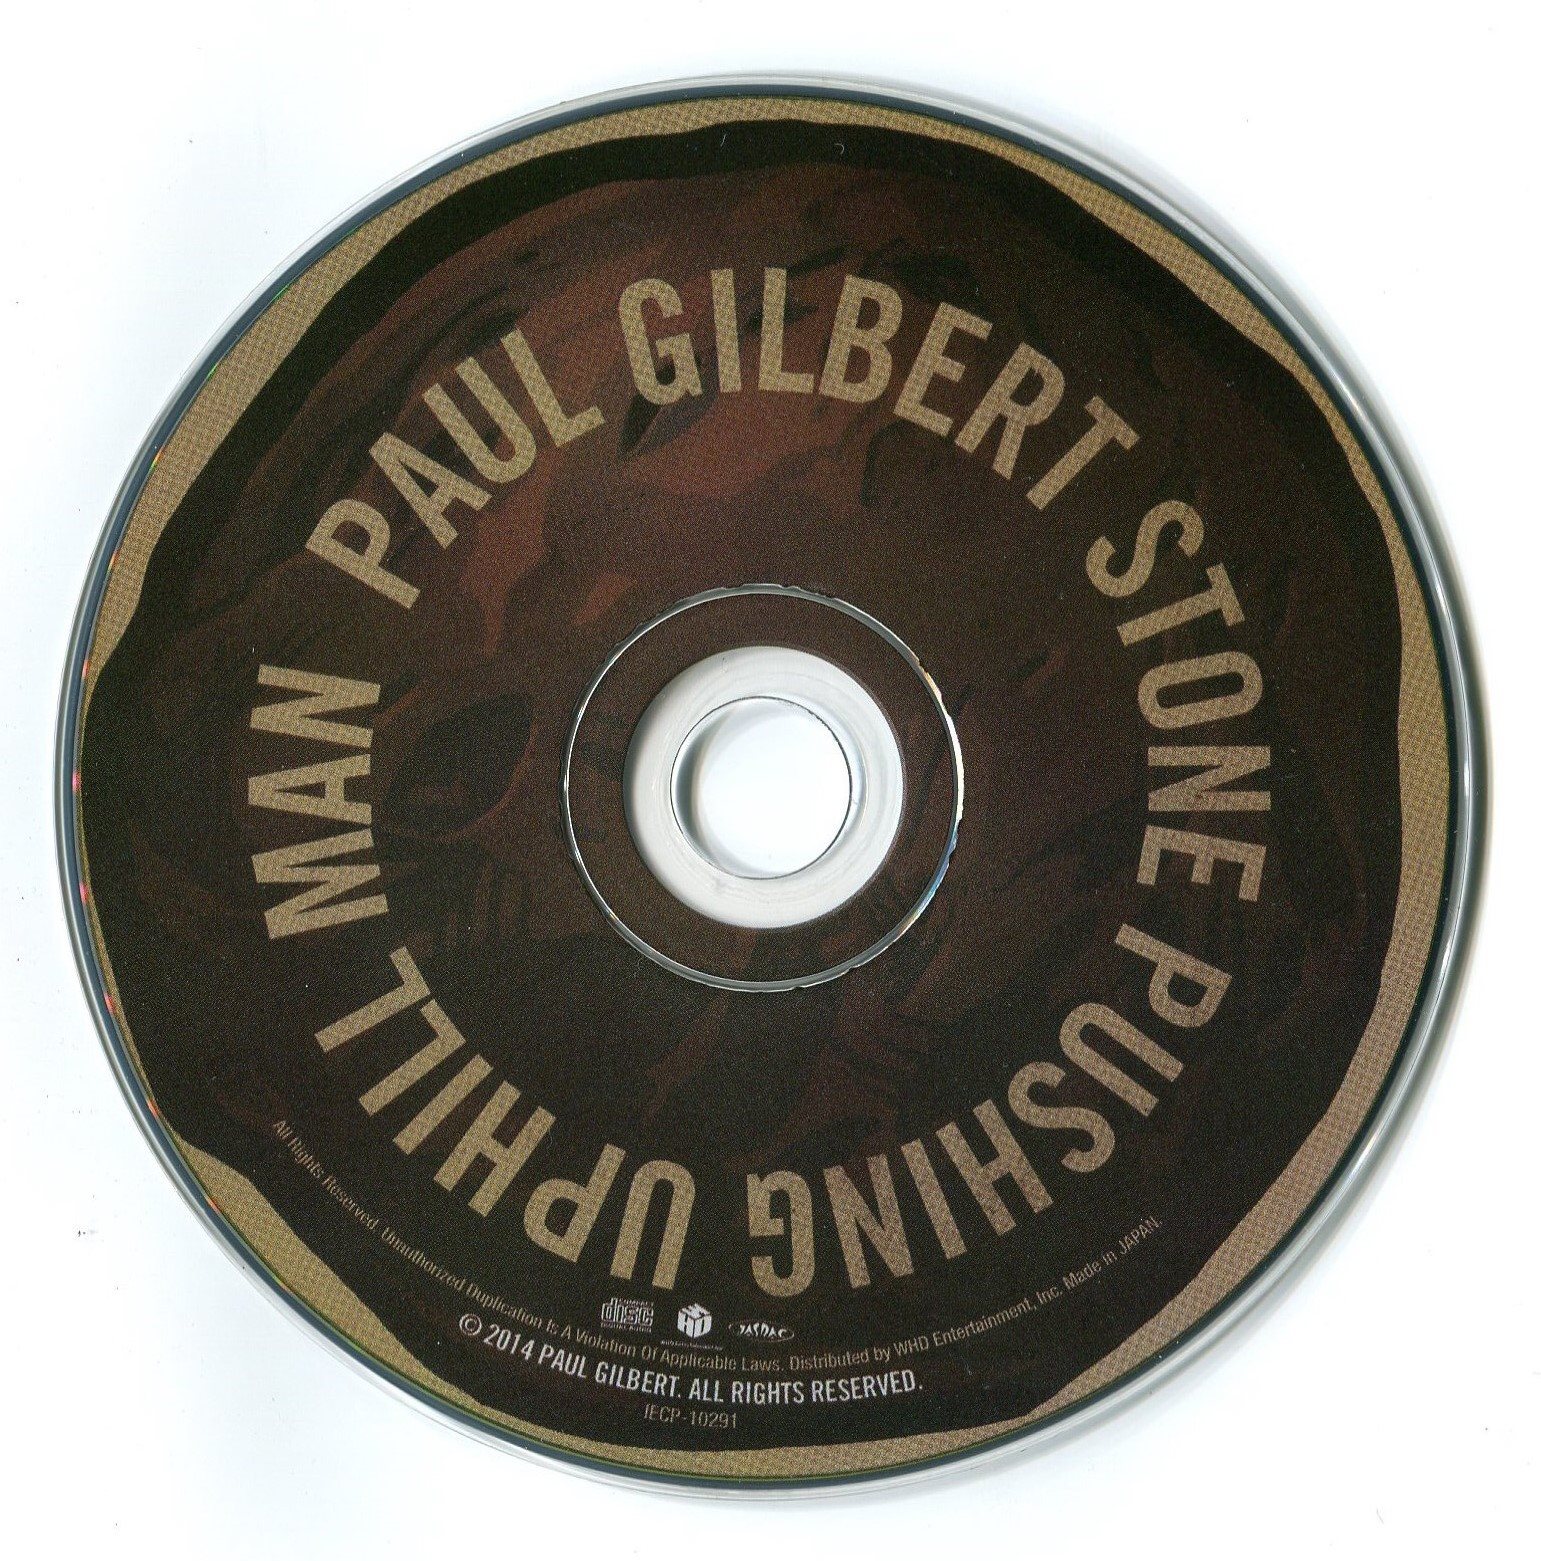 Paul Gilbert -Stone pushing uphill man- 28/06/2014 - YouTube